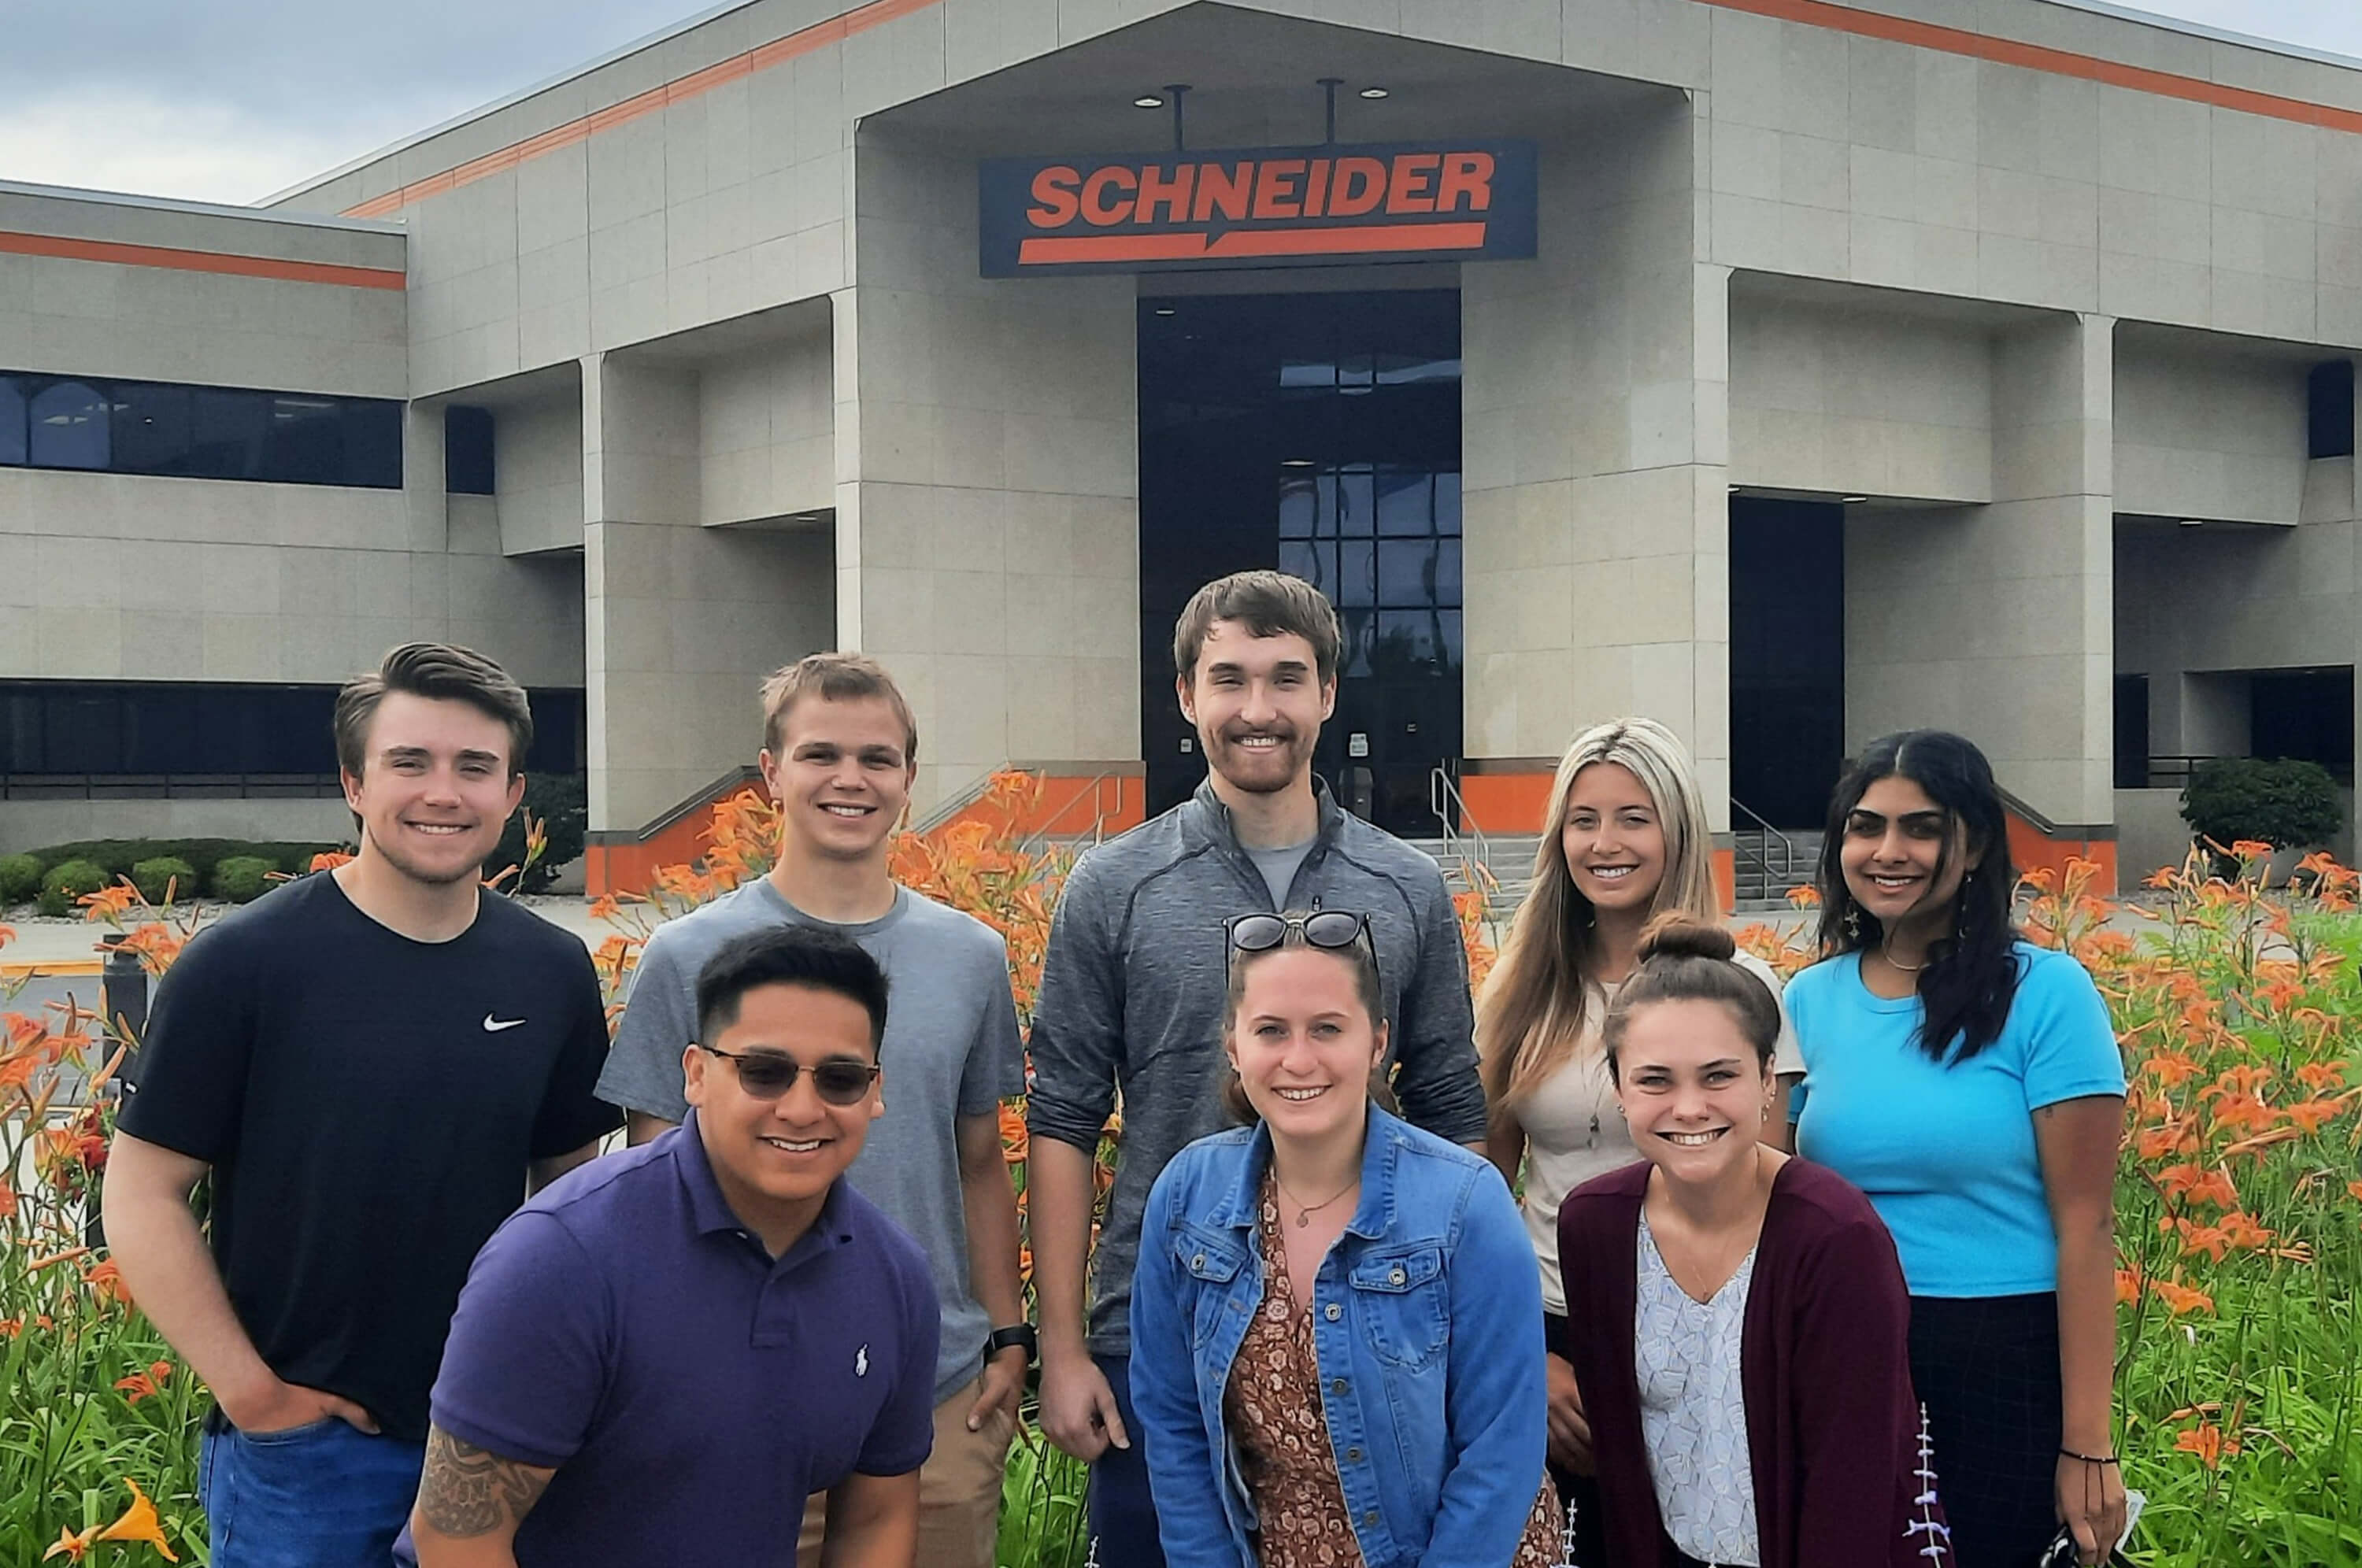 Eight Schneider interns pose together outside Schneider's corporate office in Green Bay, Wisconsin